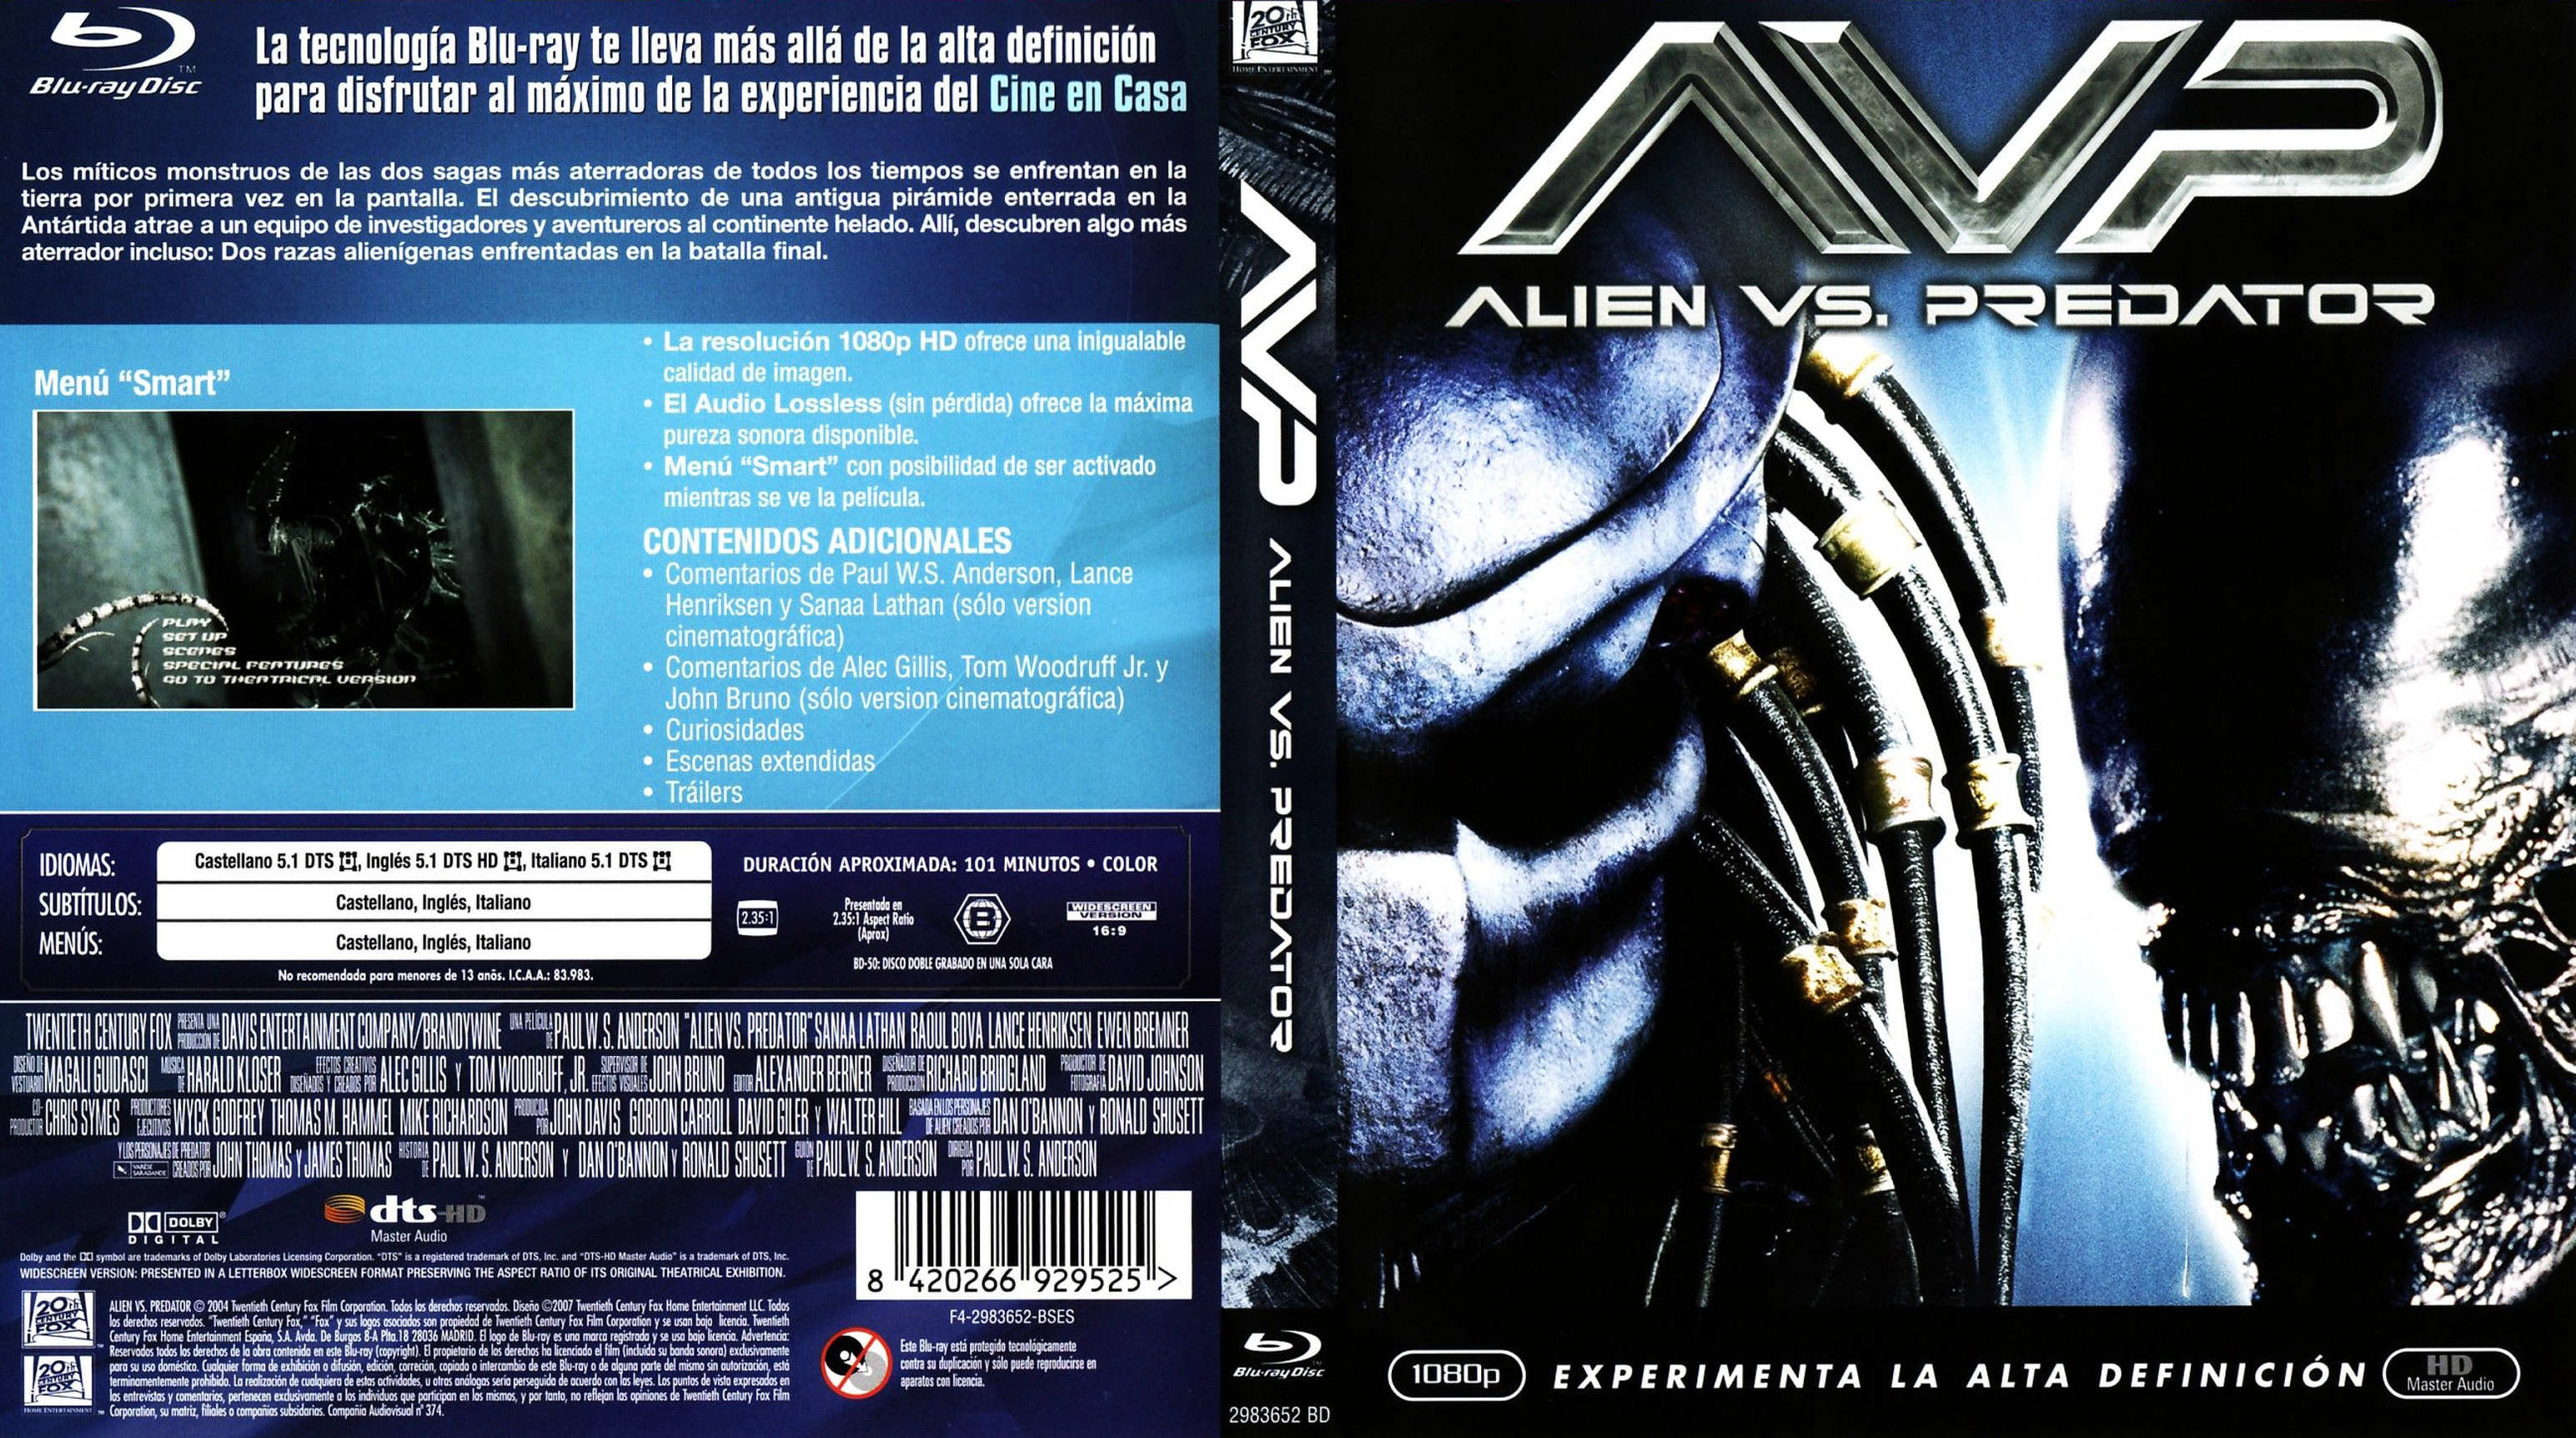 AVP: Alien Vs. Predator #9